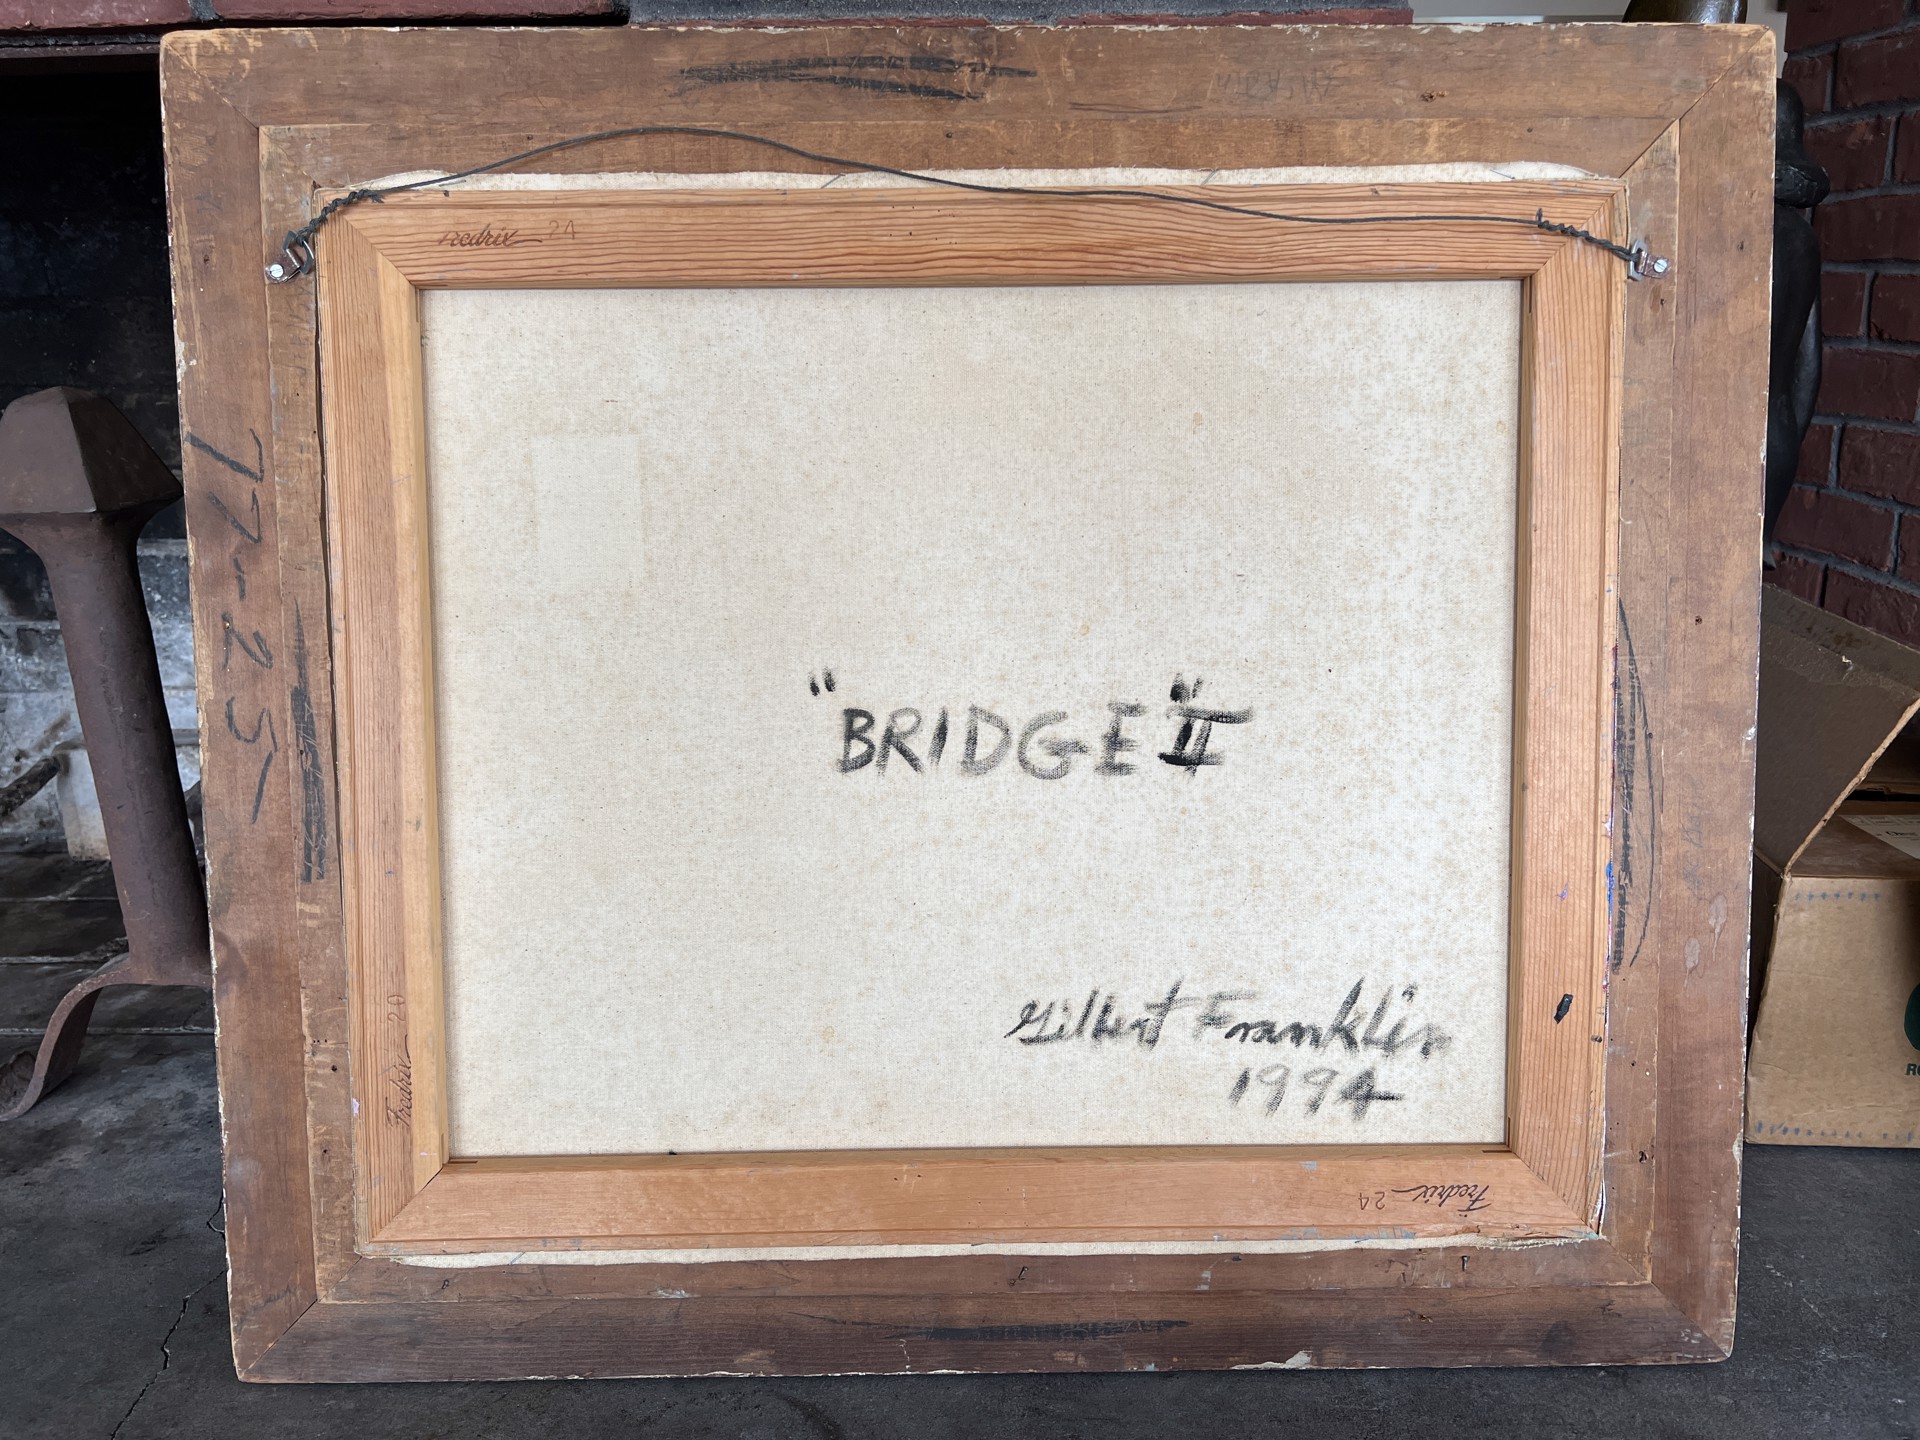 Bridge II by Gilbert Franklin